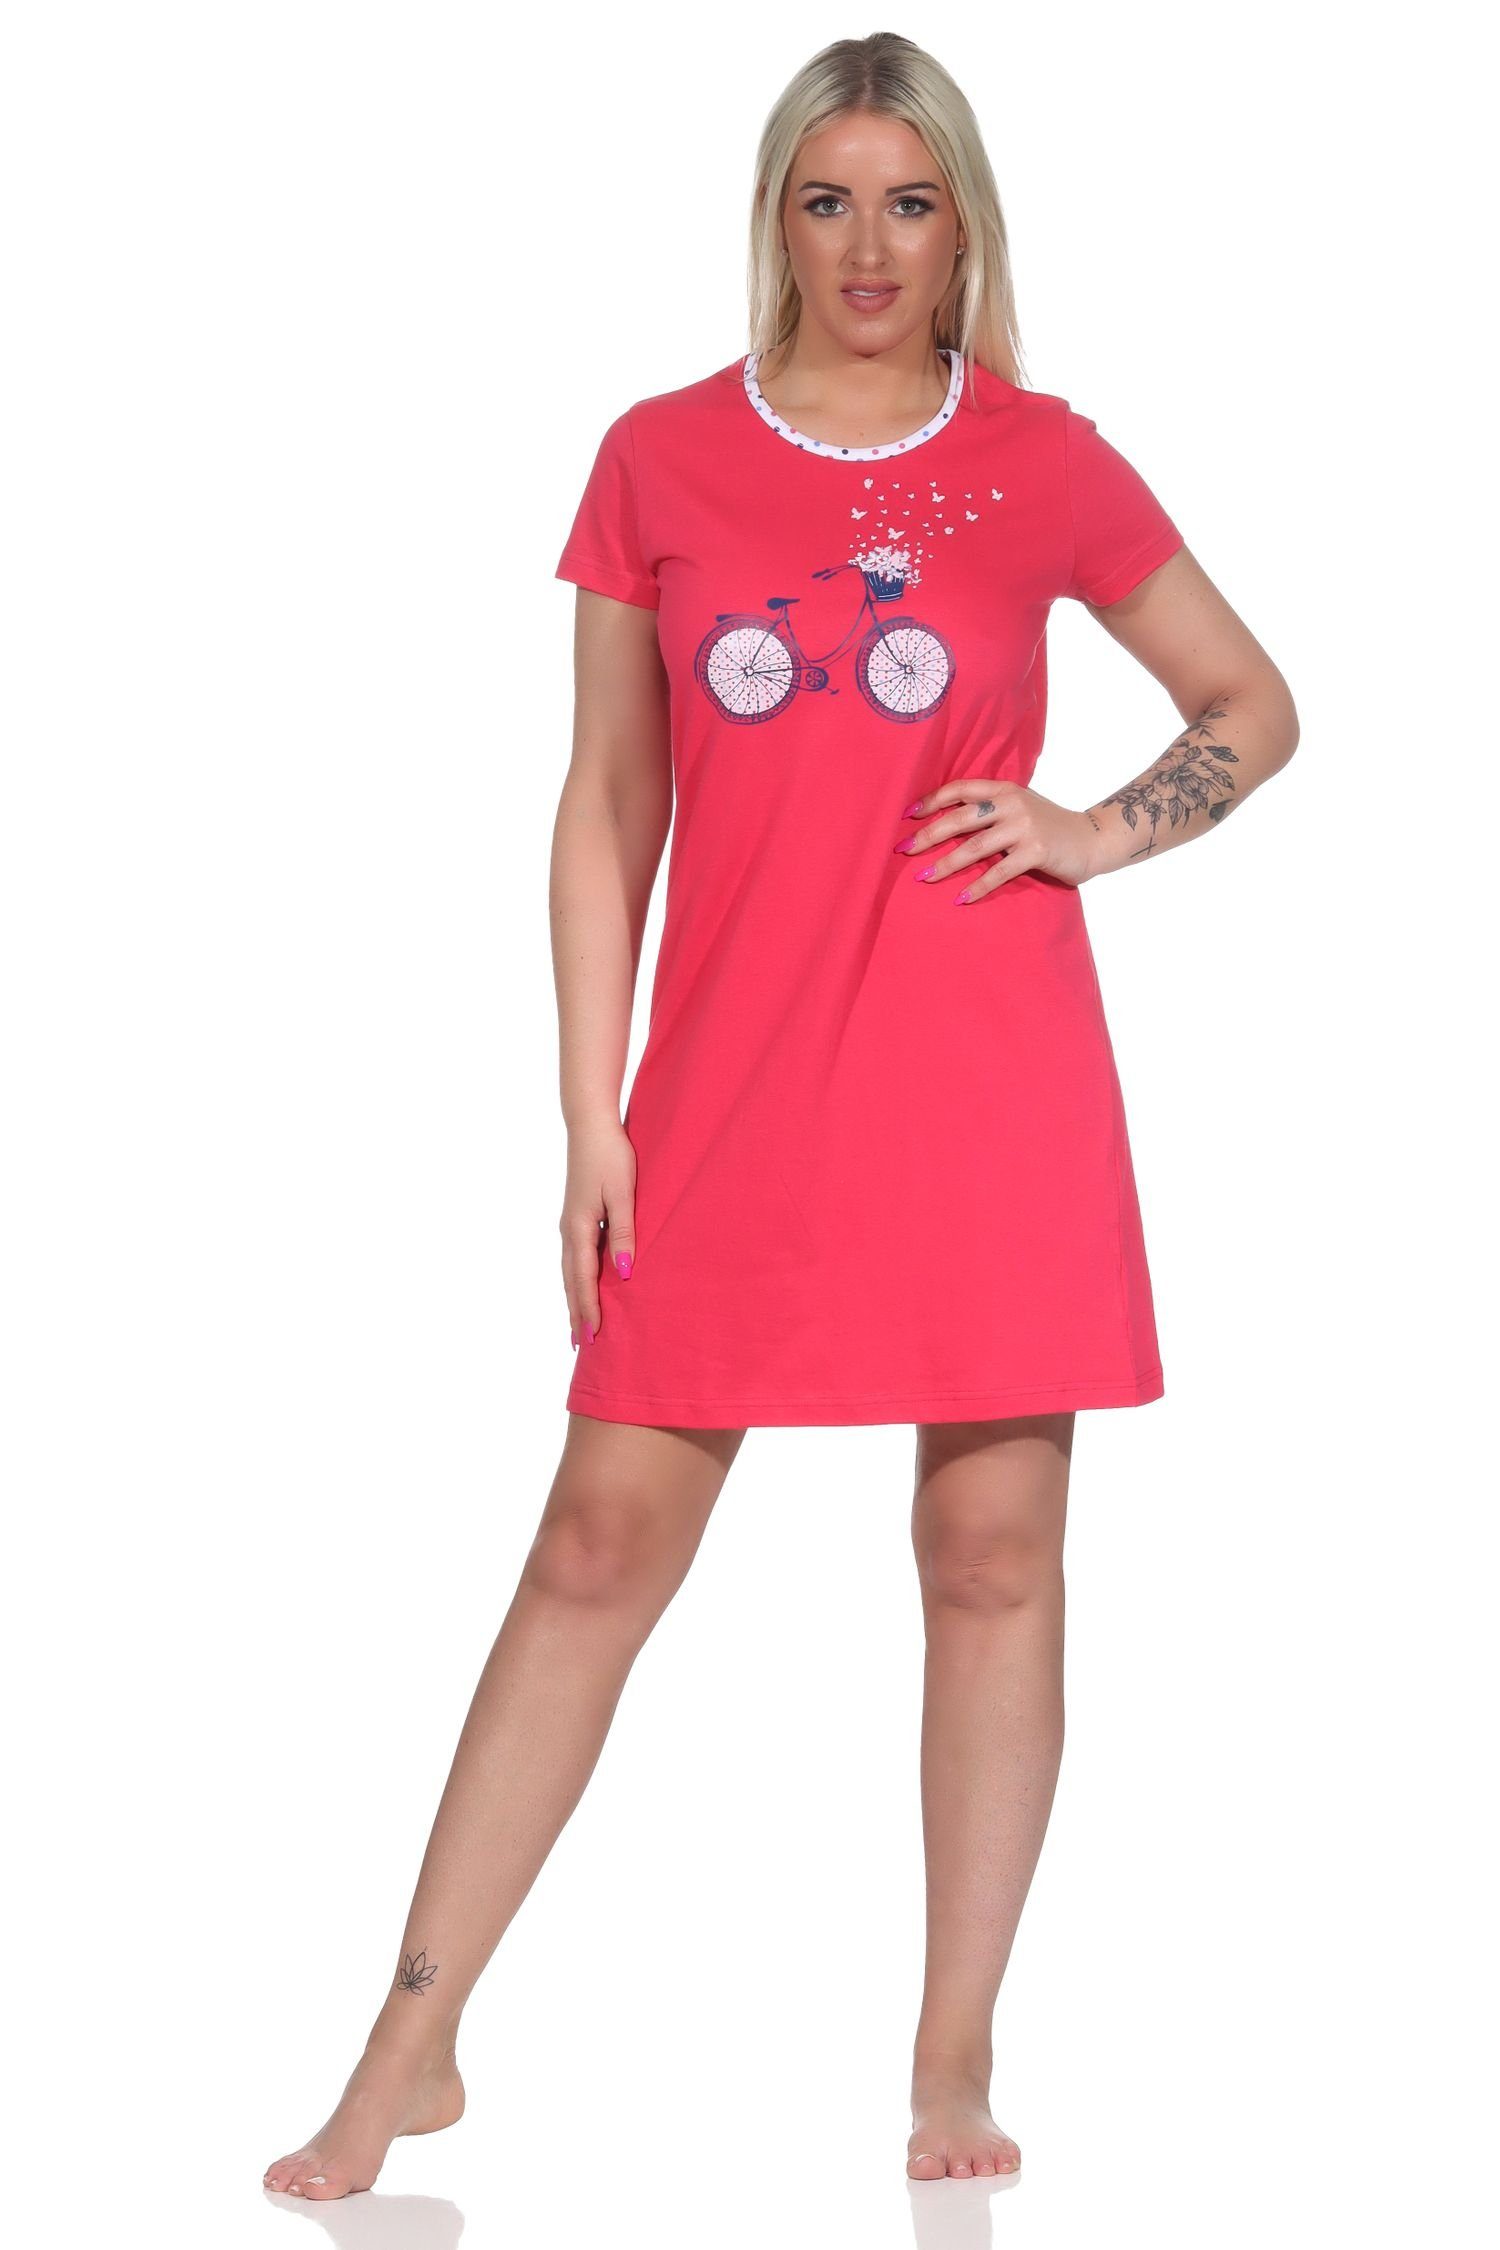 Normann Nachthemd Kurzes Damen Nachthemd Bigshirt mit Fahrrad-Motiv - 112 10 736 rot